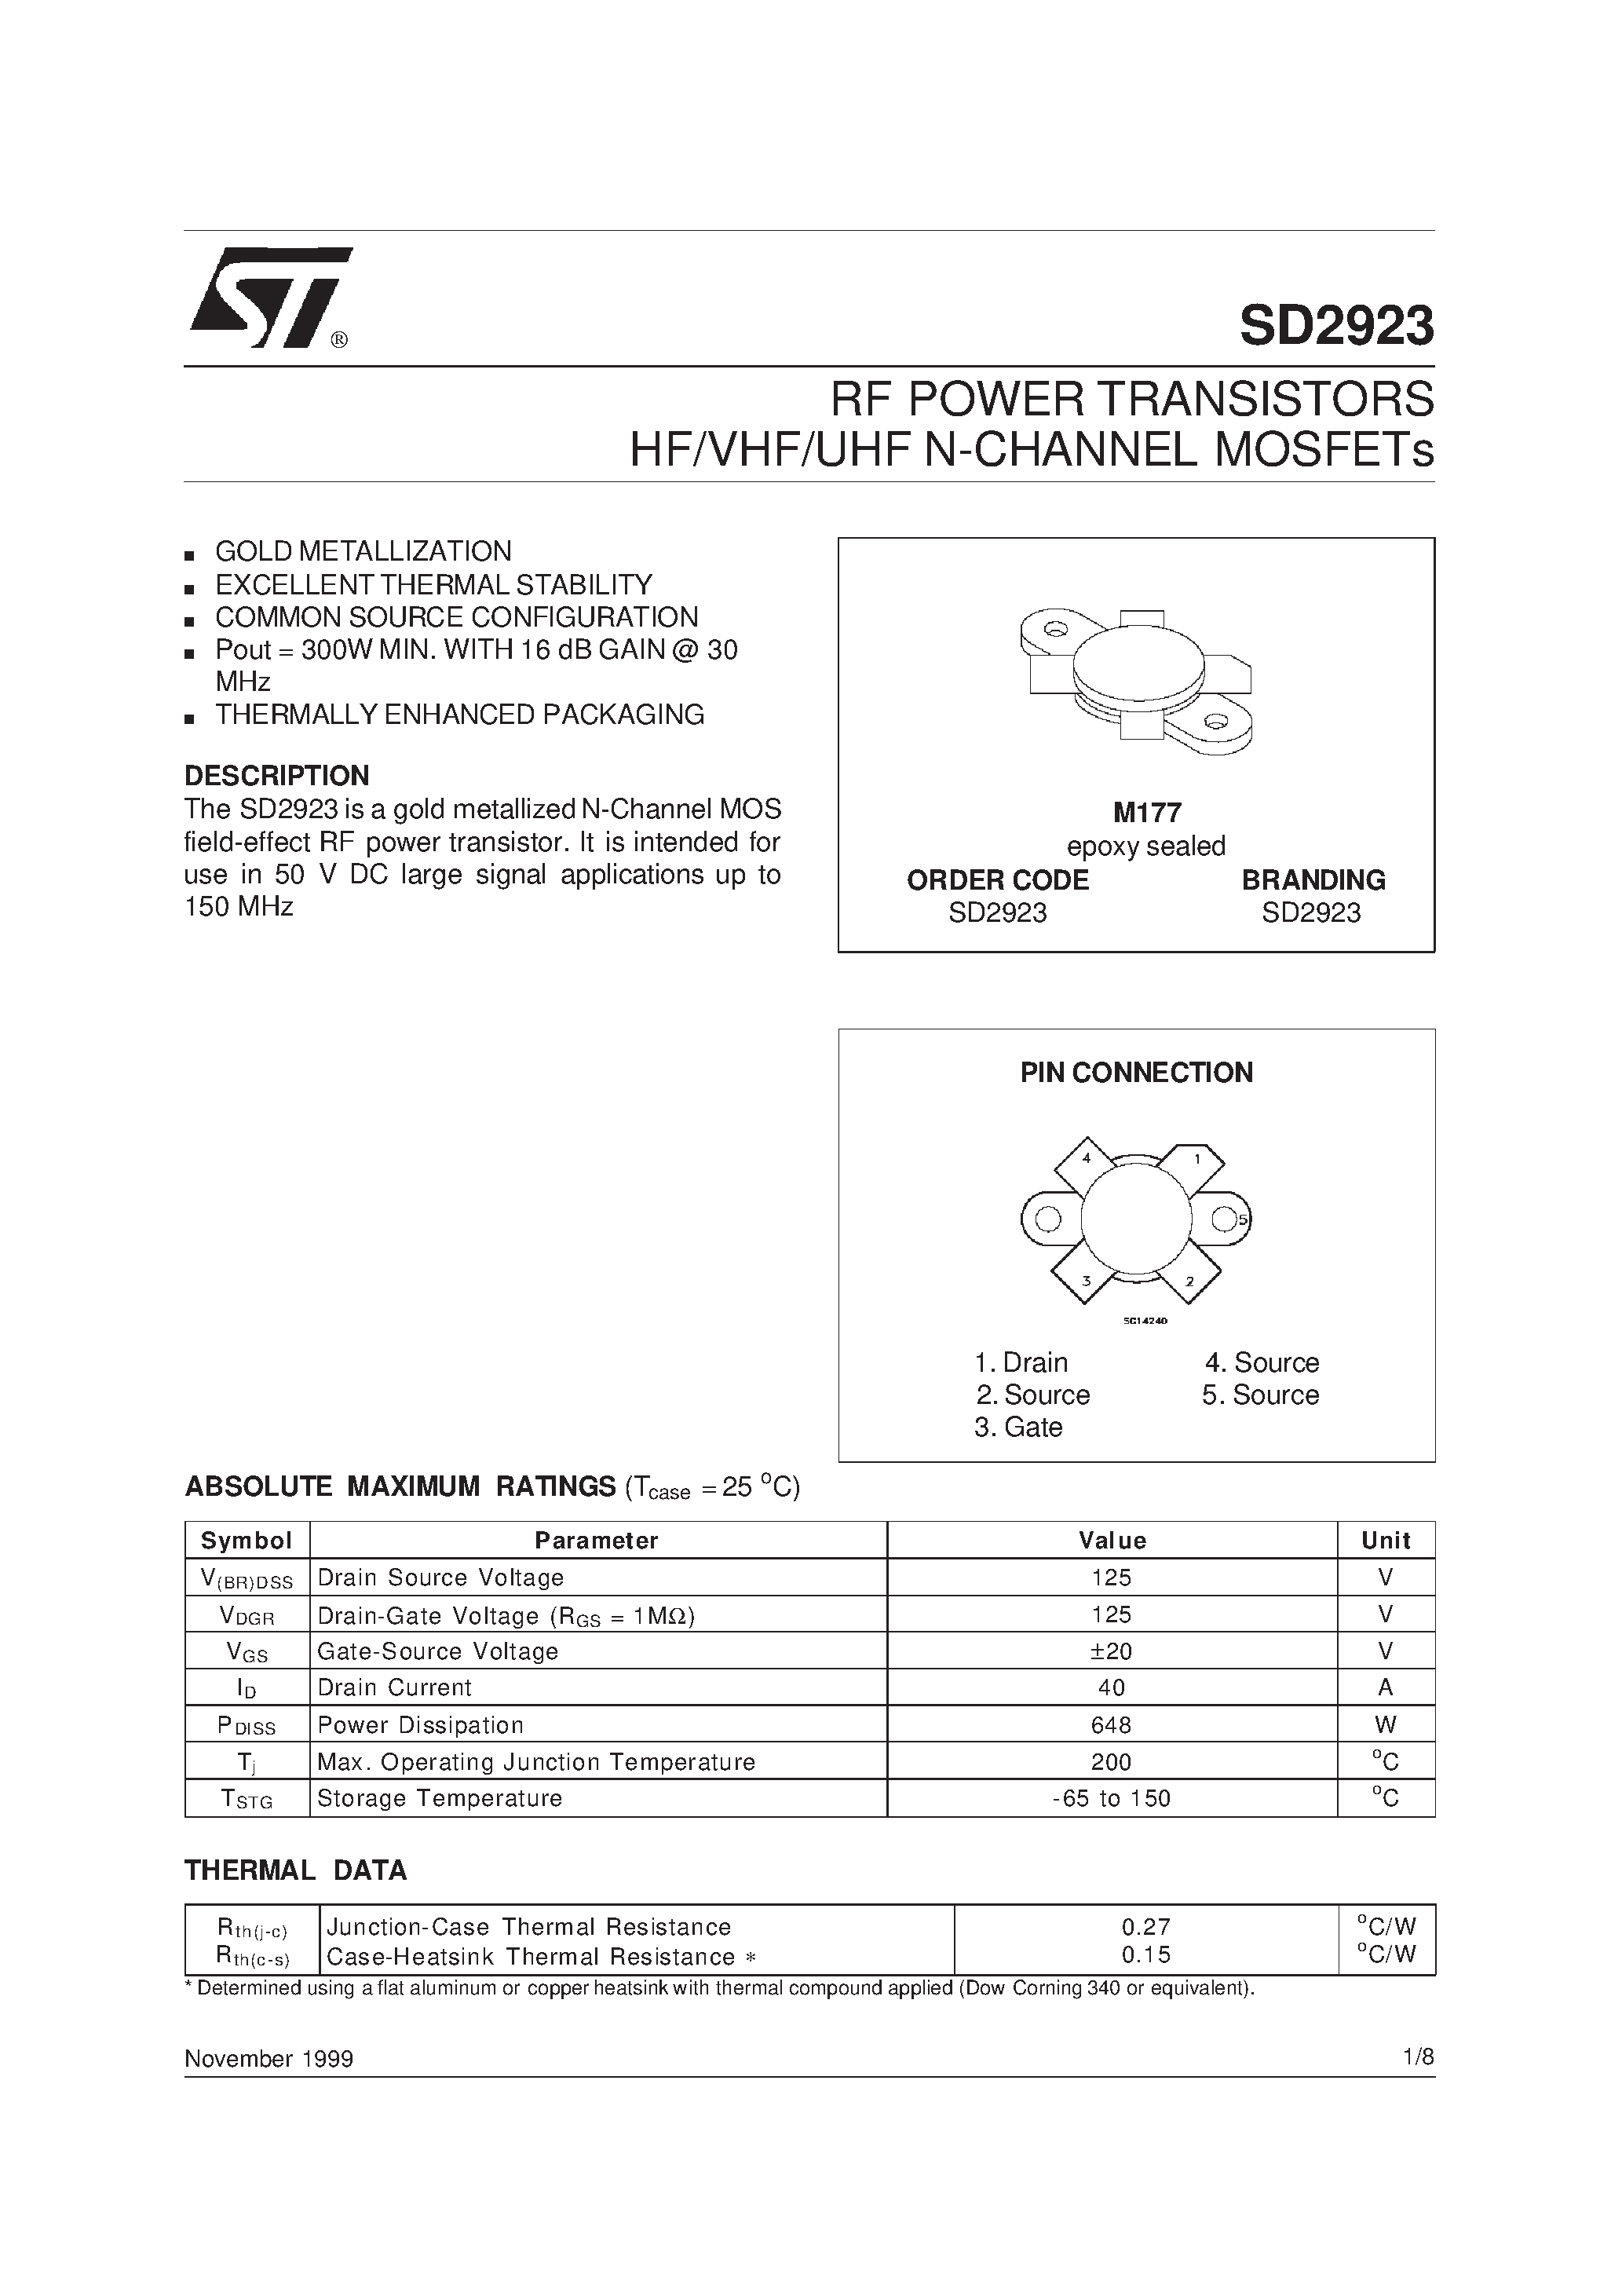 Datasheet SD2923 - RF POWER TRANSISTORS HF/VHF/UHF N-CHANNEL MOSFETs page 1